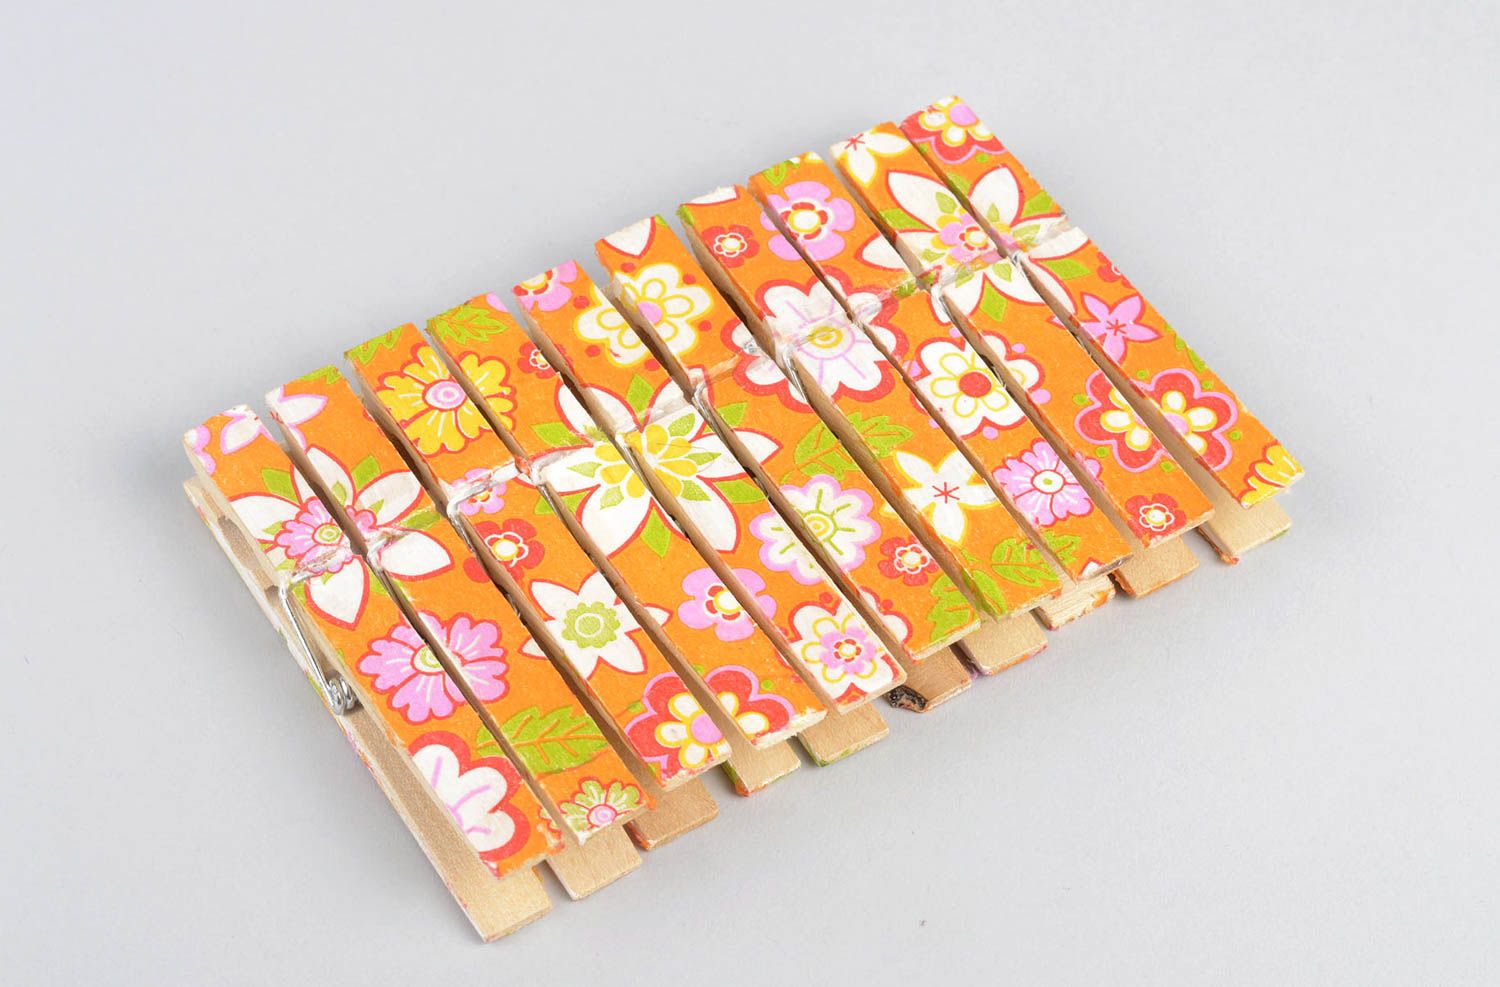 Handmade clothespins bright clothespins wooden clothespins home decor photo 1